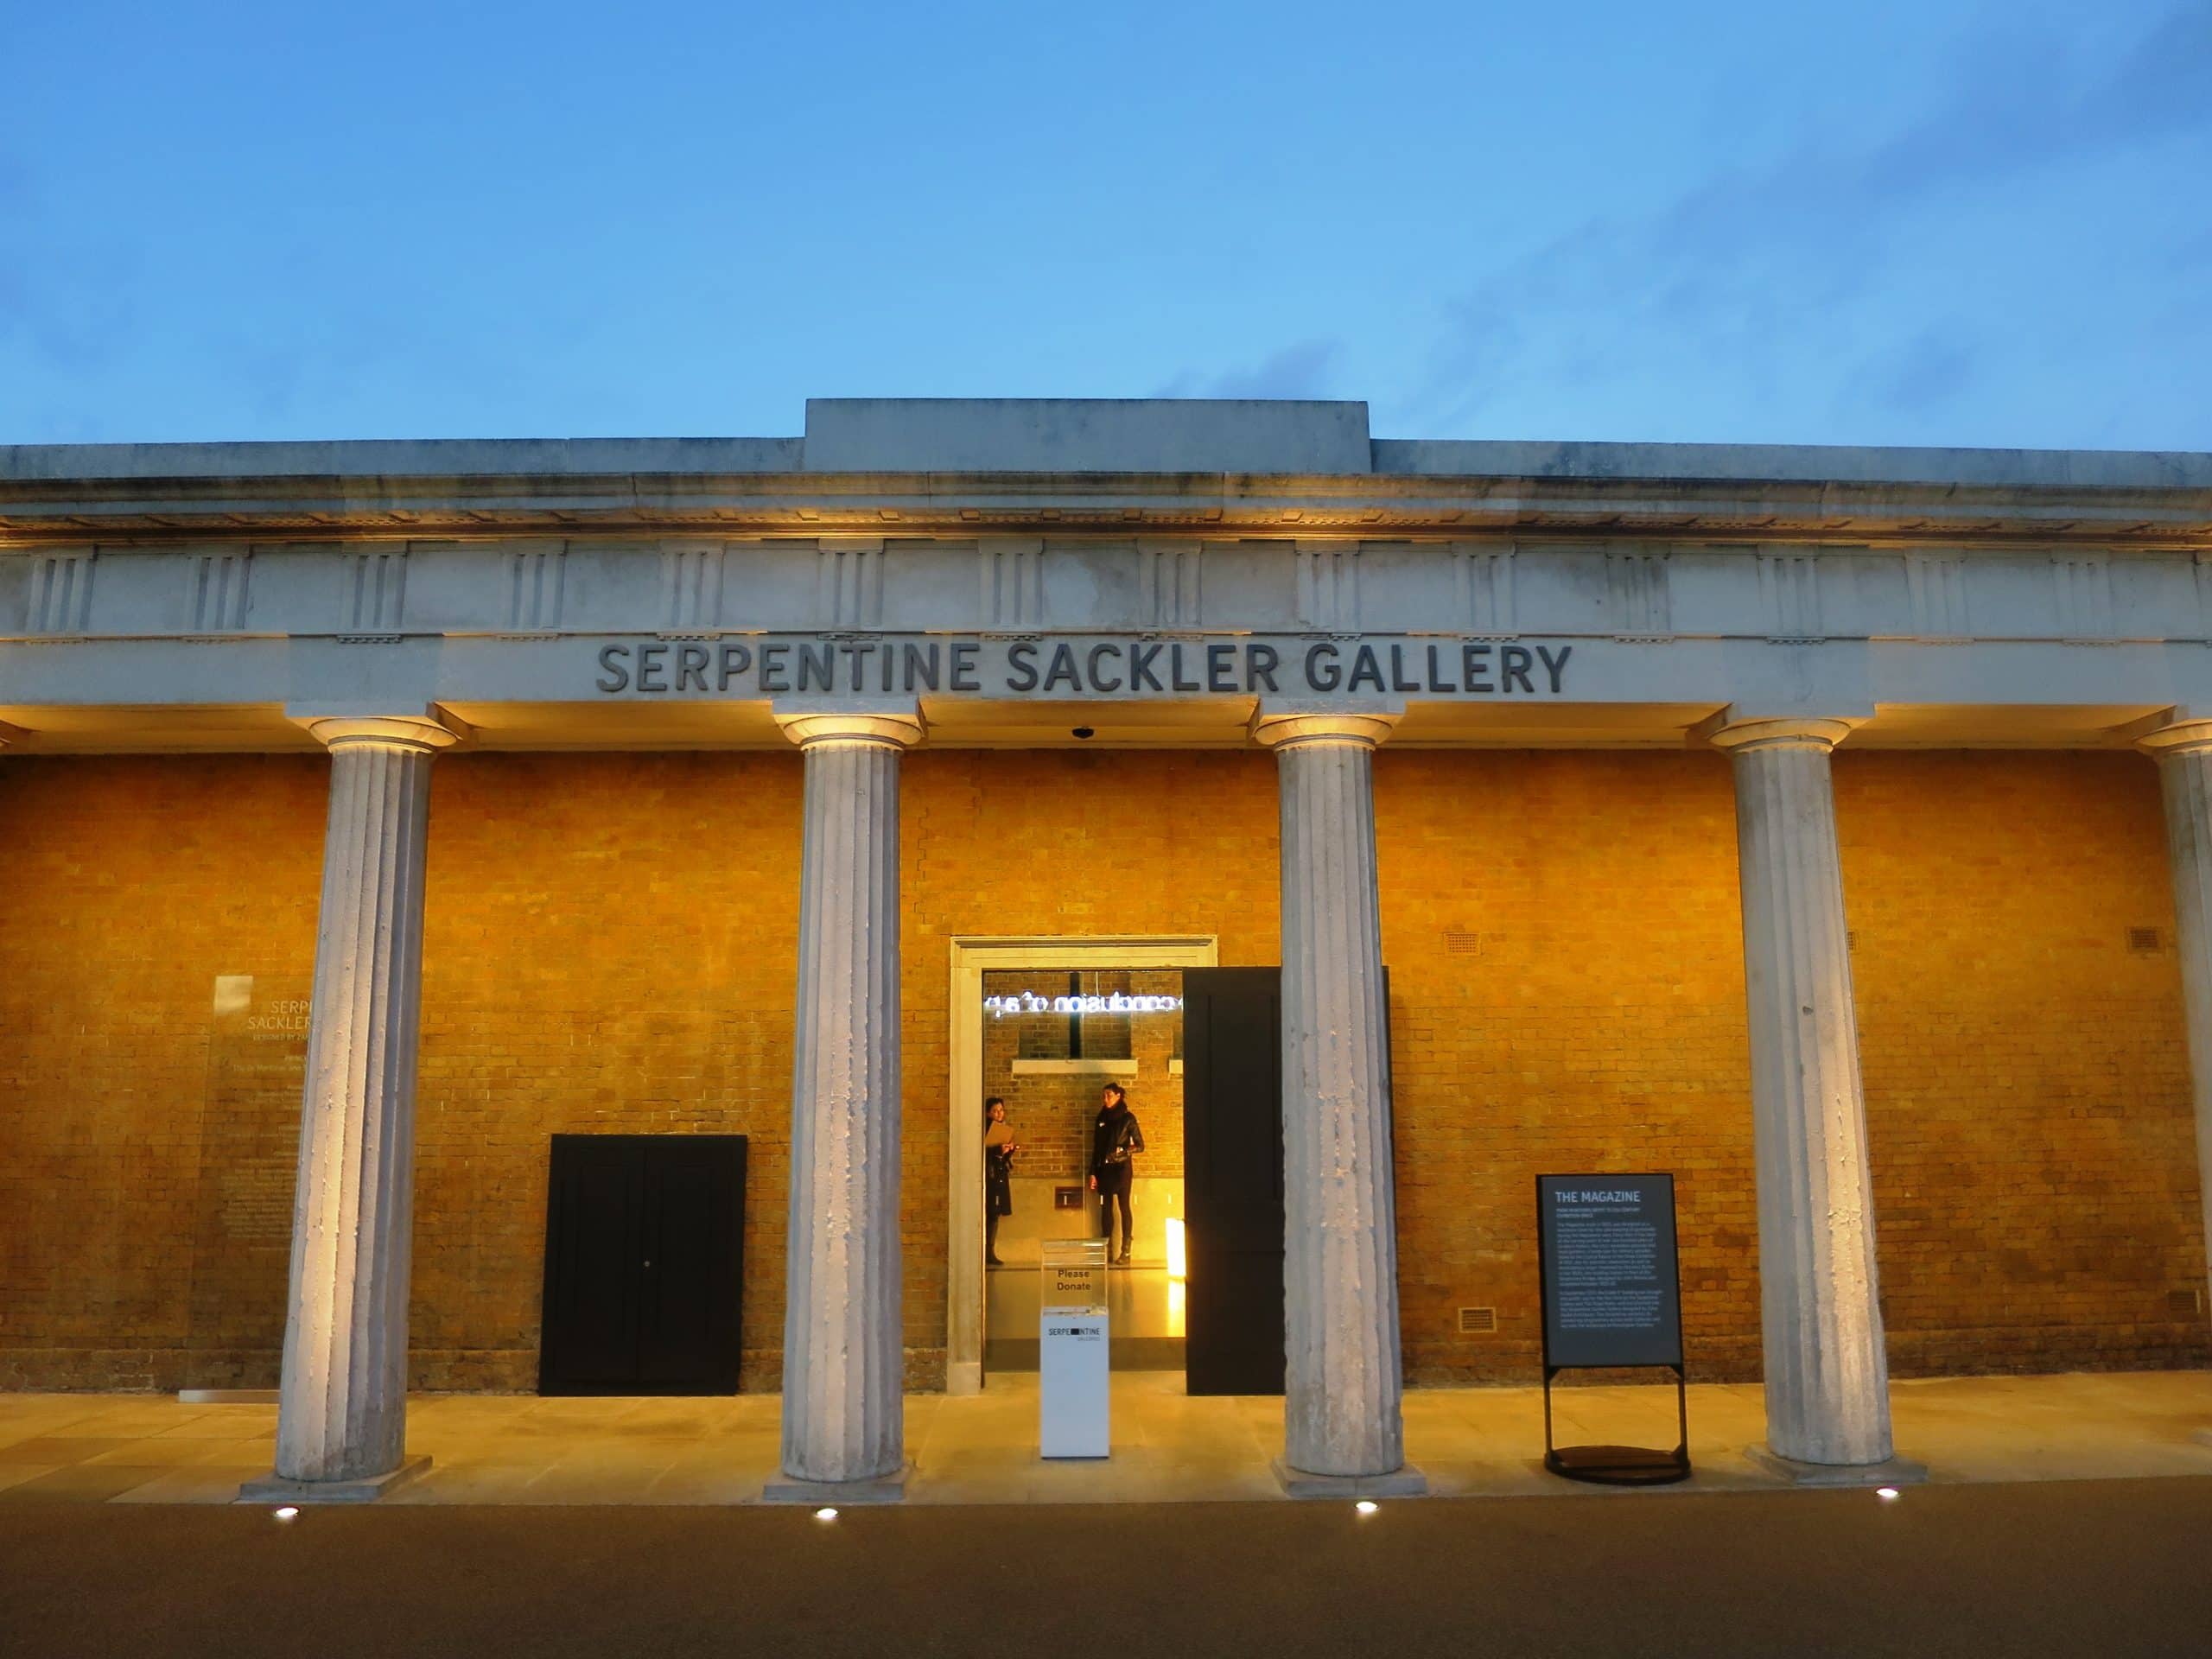 Sackler Gallery as their money talks in British arts